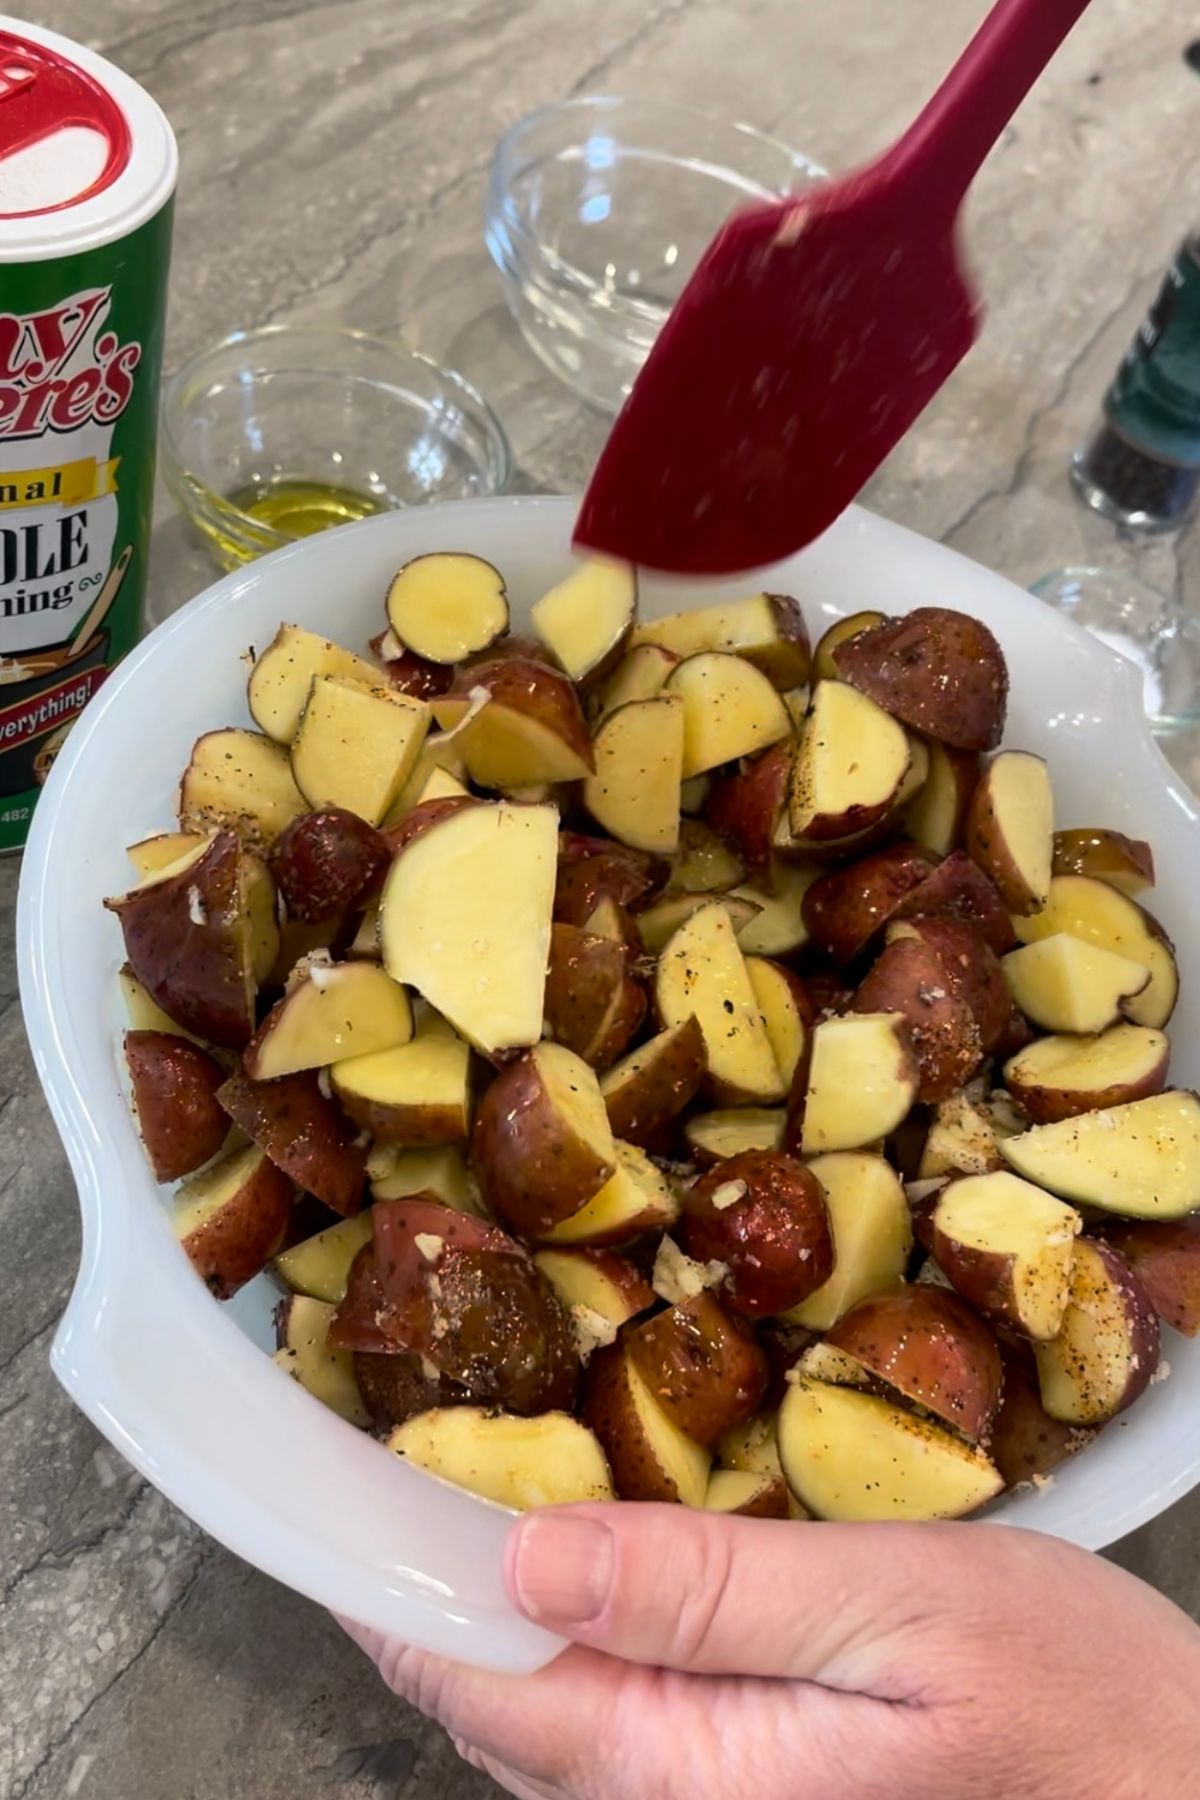 Red potatoes coated in oil and seasonings.